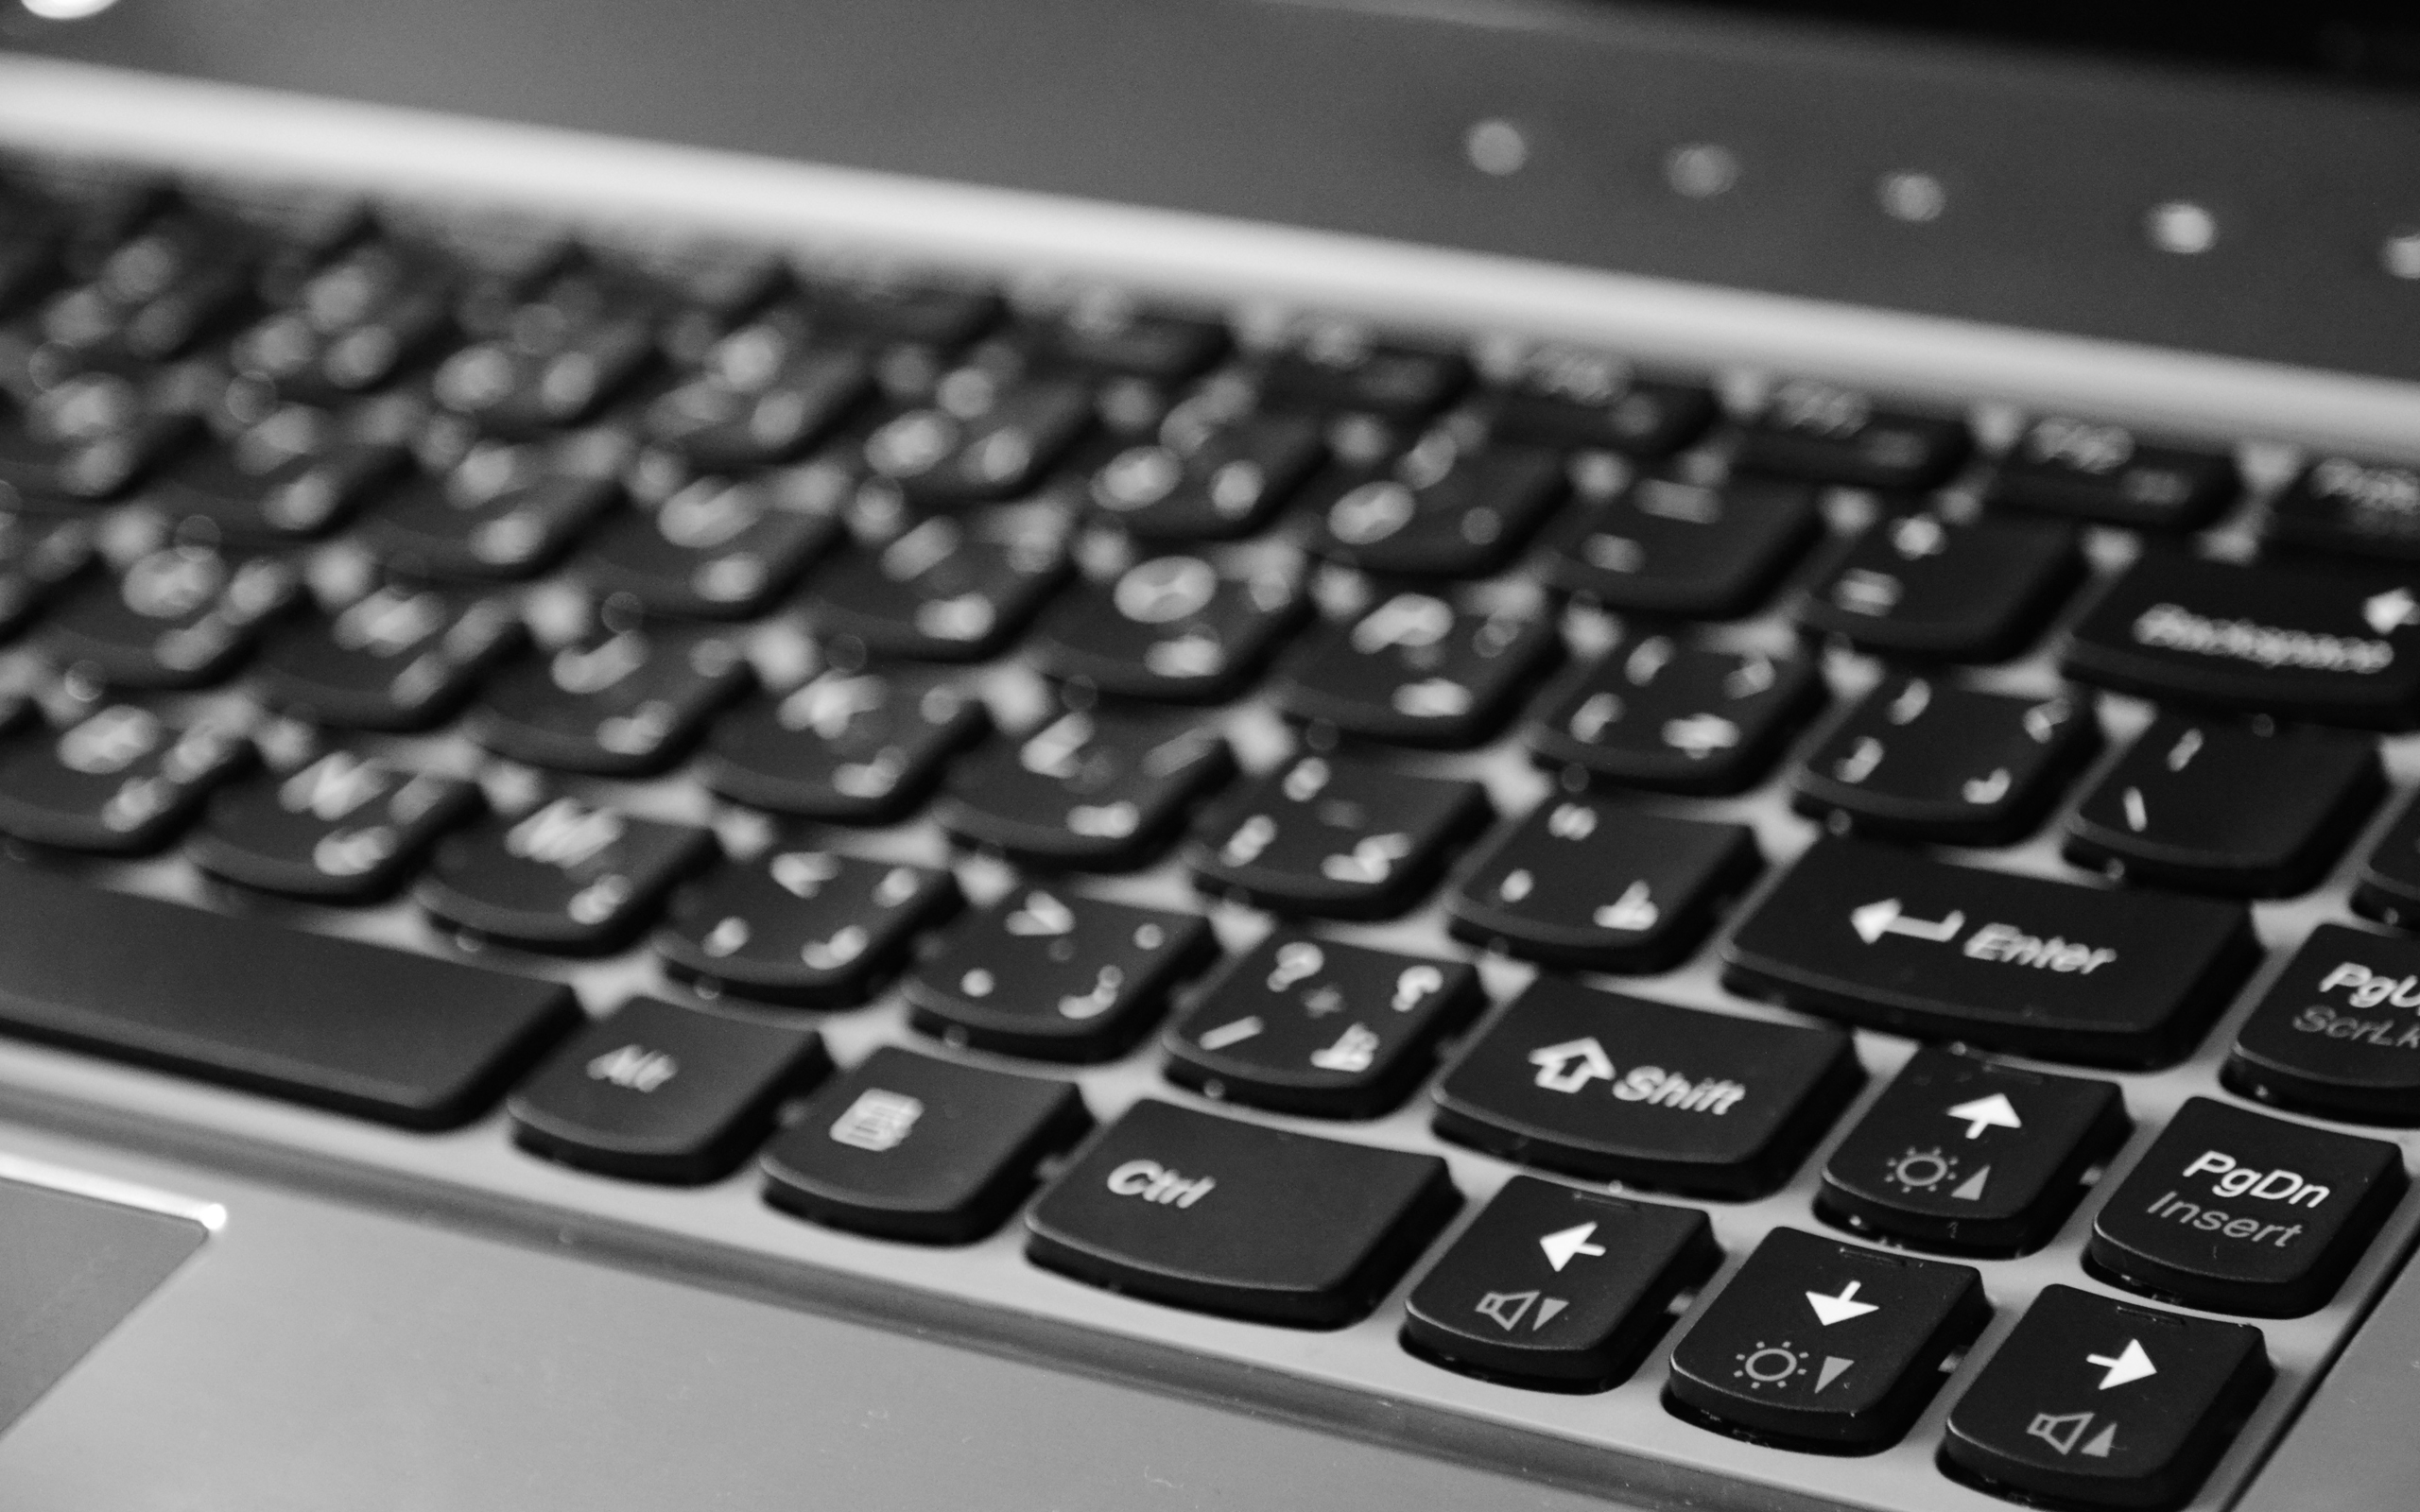 keyboard wallpaper hd,computer keyboard,electronic device,space bar,input device,technology